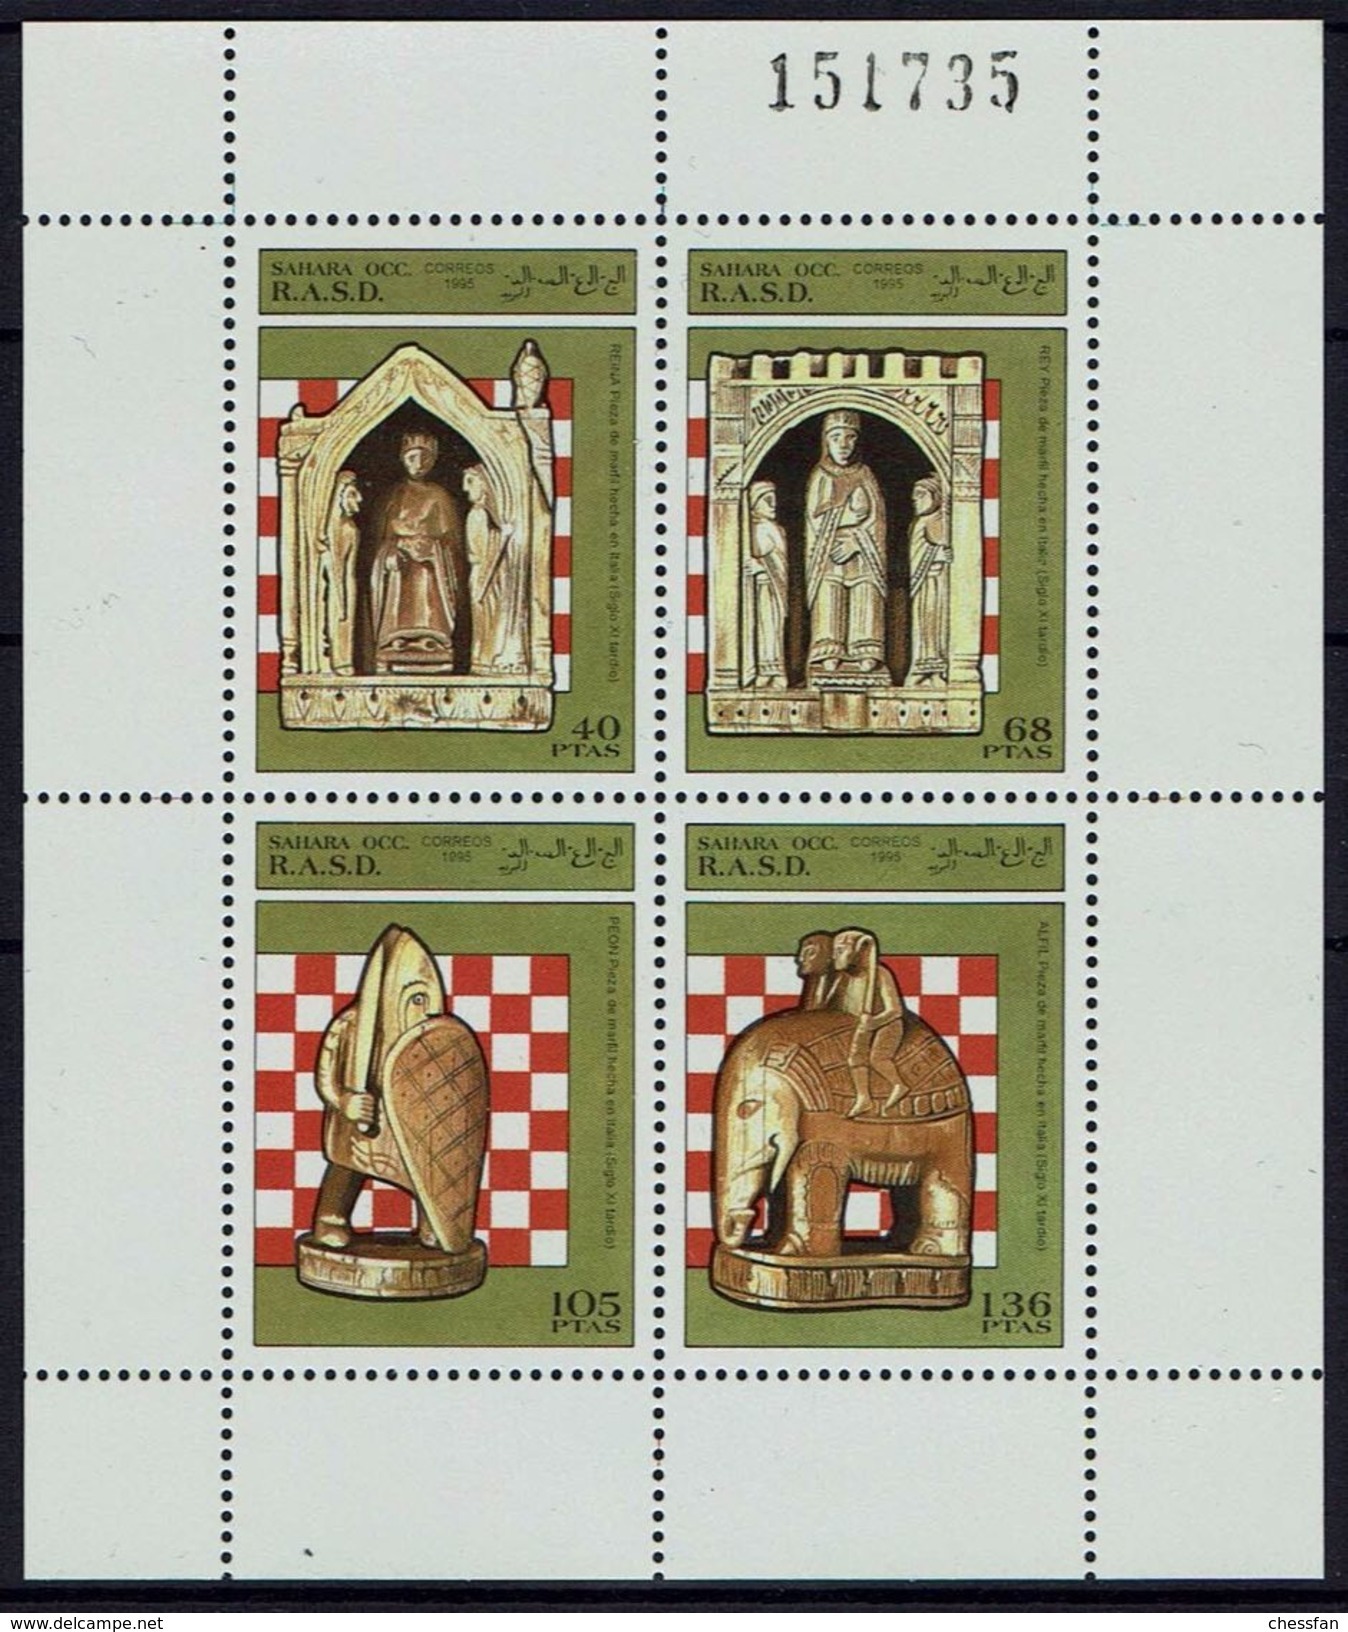 Schaken Schach Chess Ajedrez - Sahara RASD 1995 - Schach